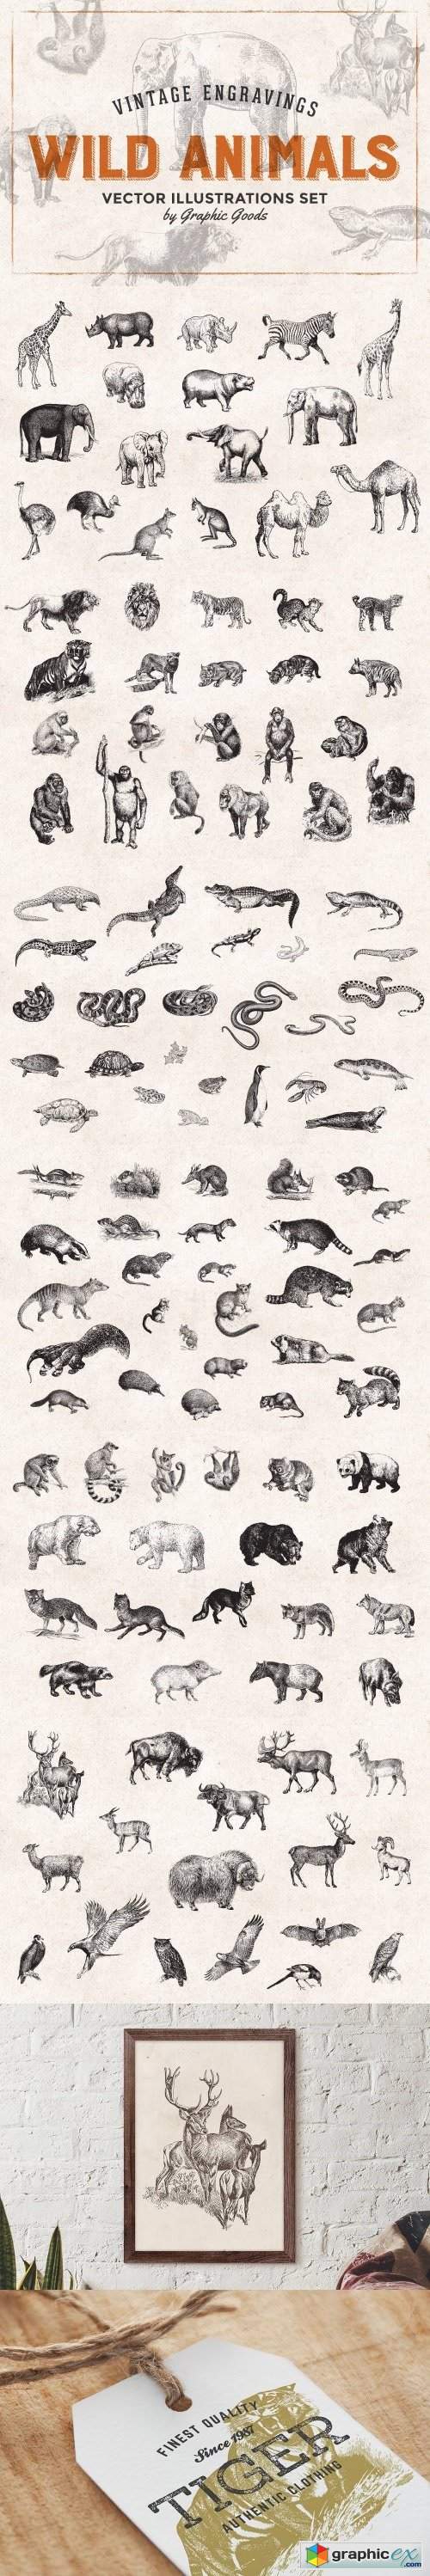 Wild Animals Engravings